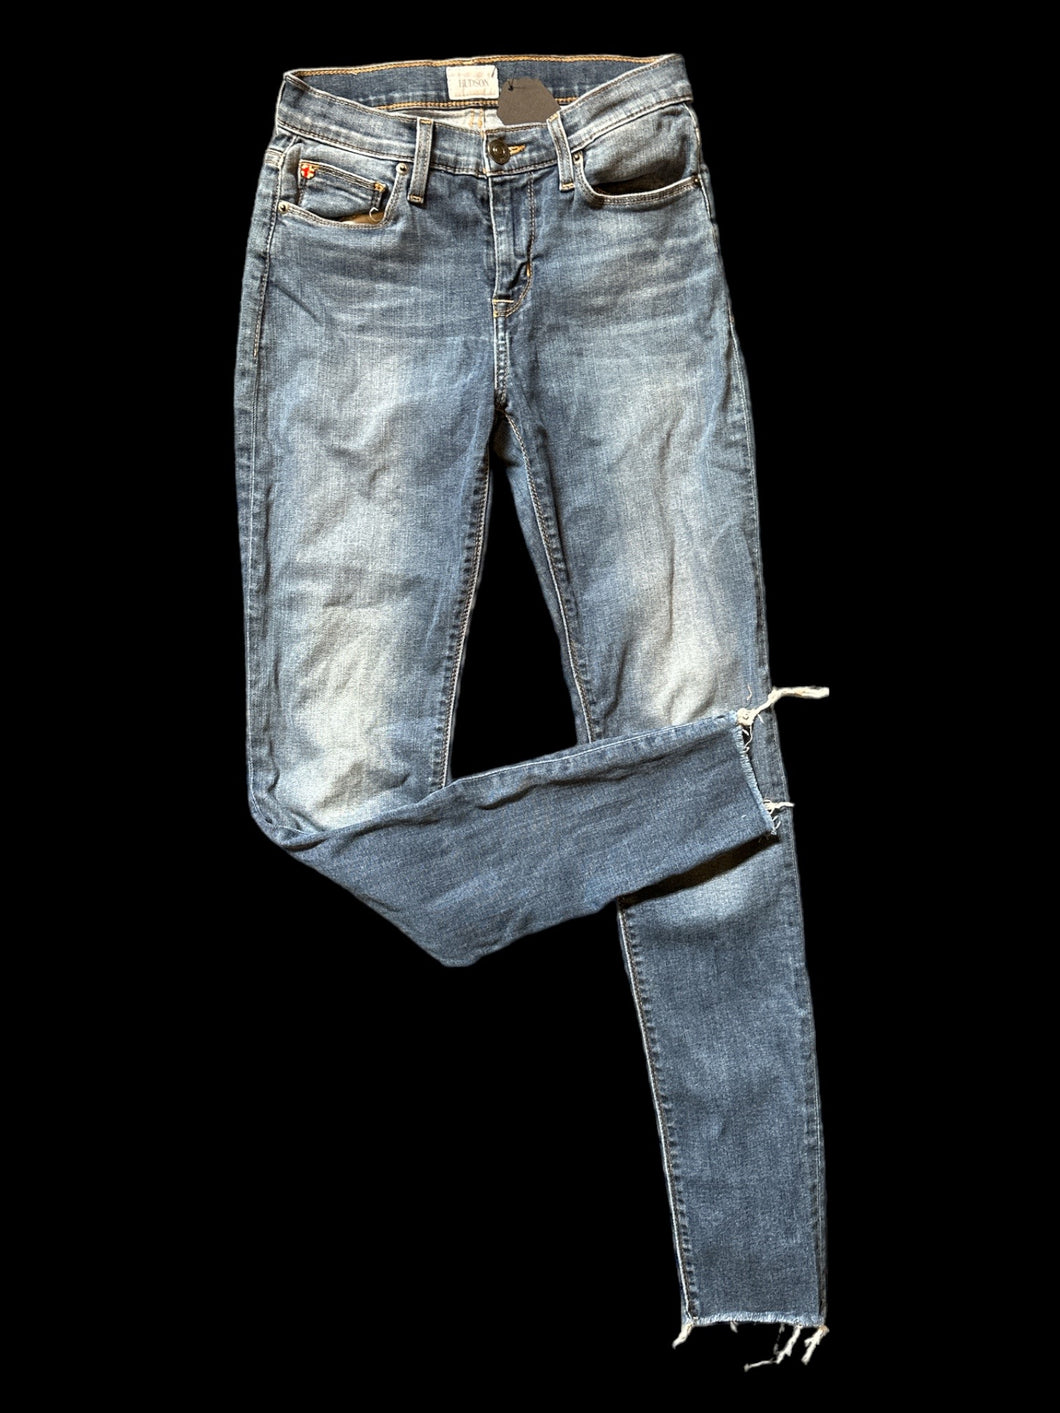 S Blue denim tapered leg jeans w/ union jack, emblem, frayed hems, belt loops, pockets, & button/zipper closure